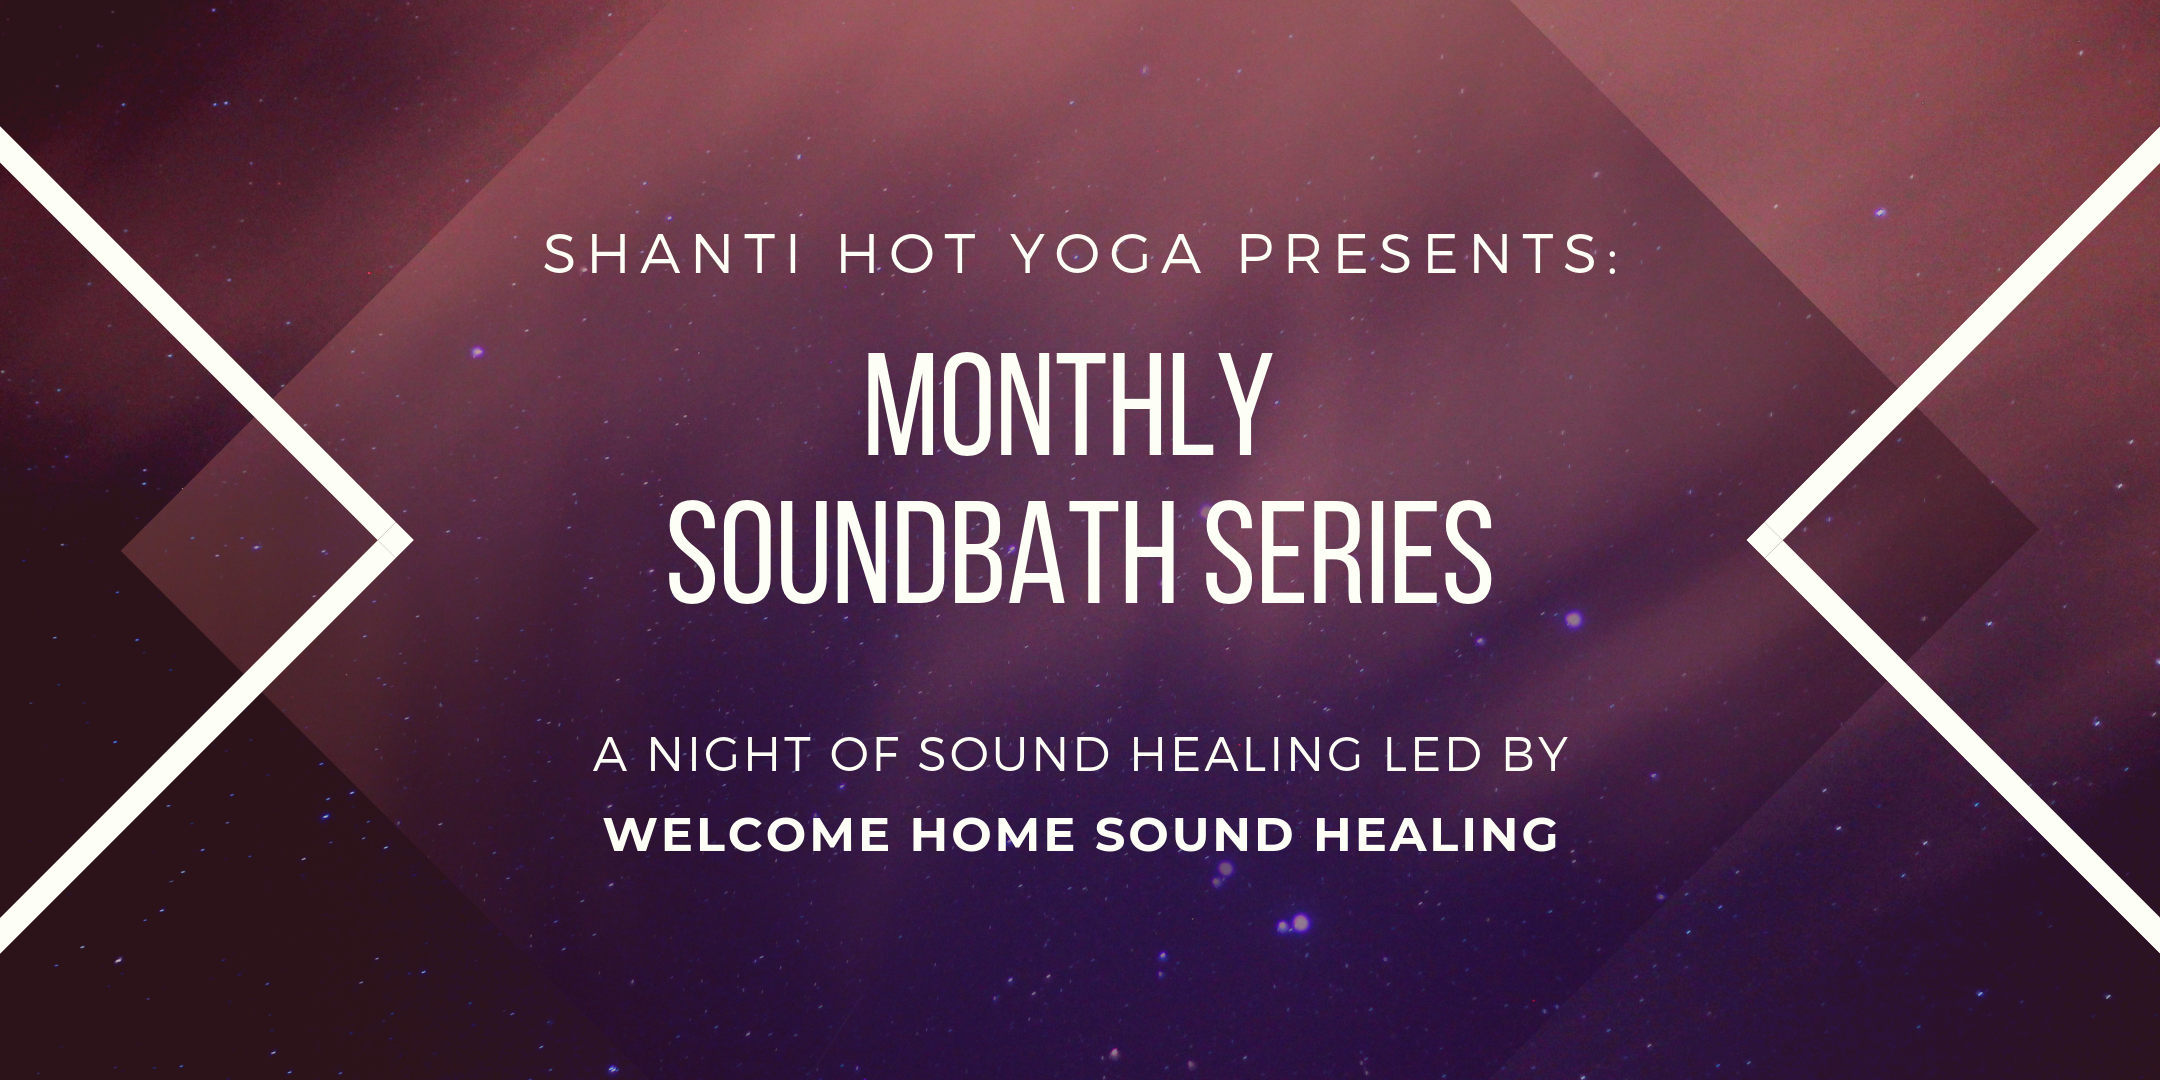 Monthly Soundbath Series At Shanti Hot Yoga